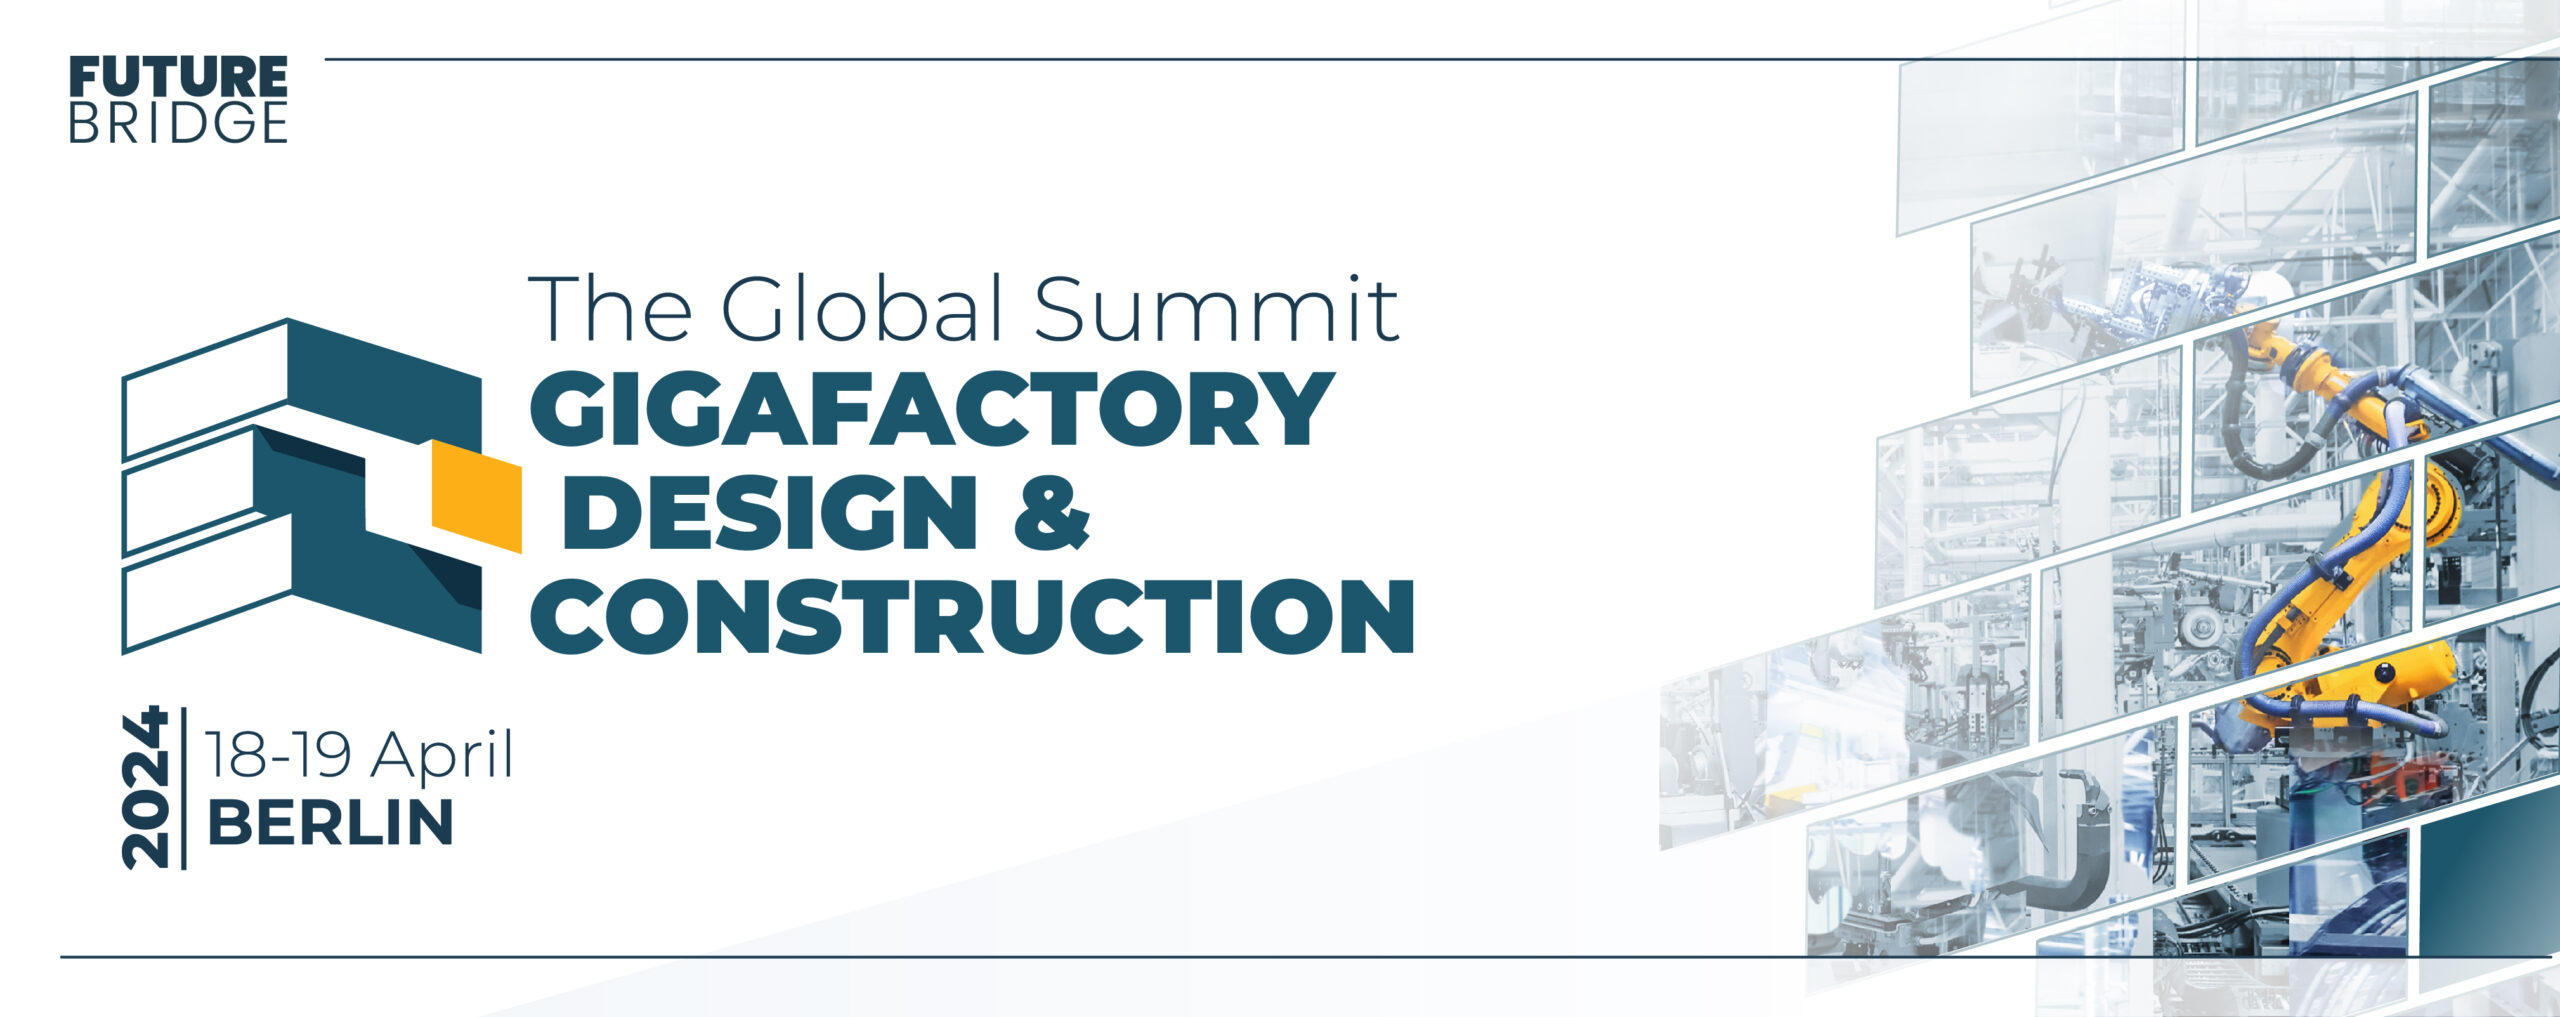 Gigafactory Design & Construction